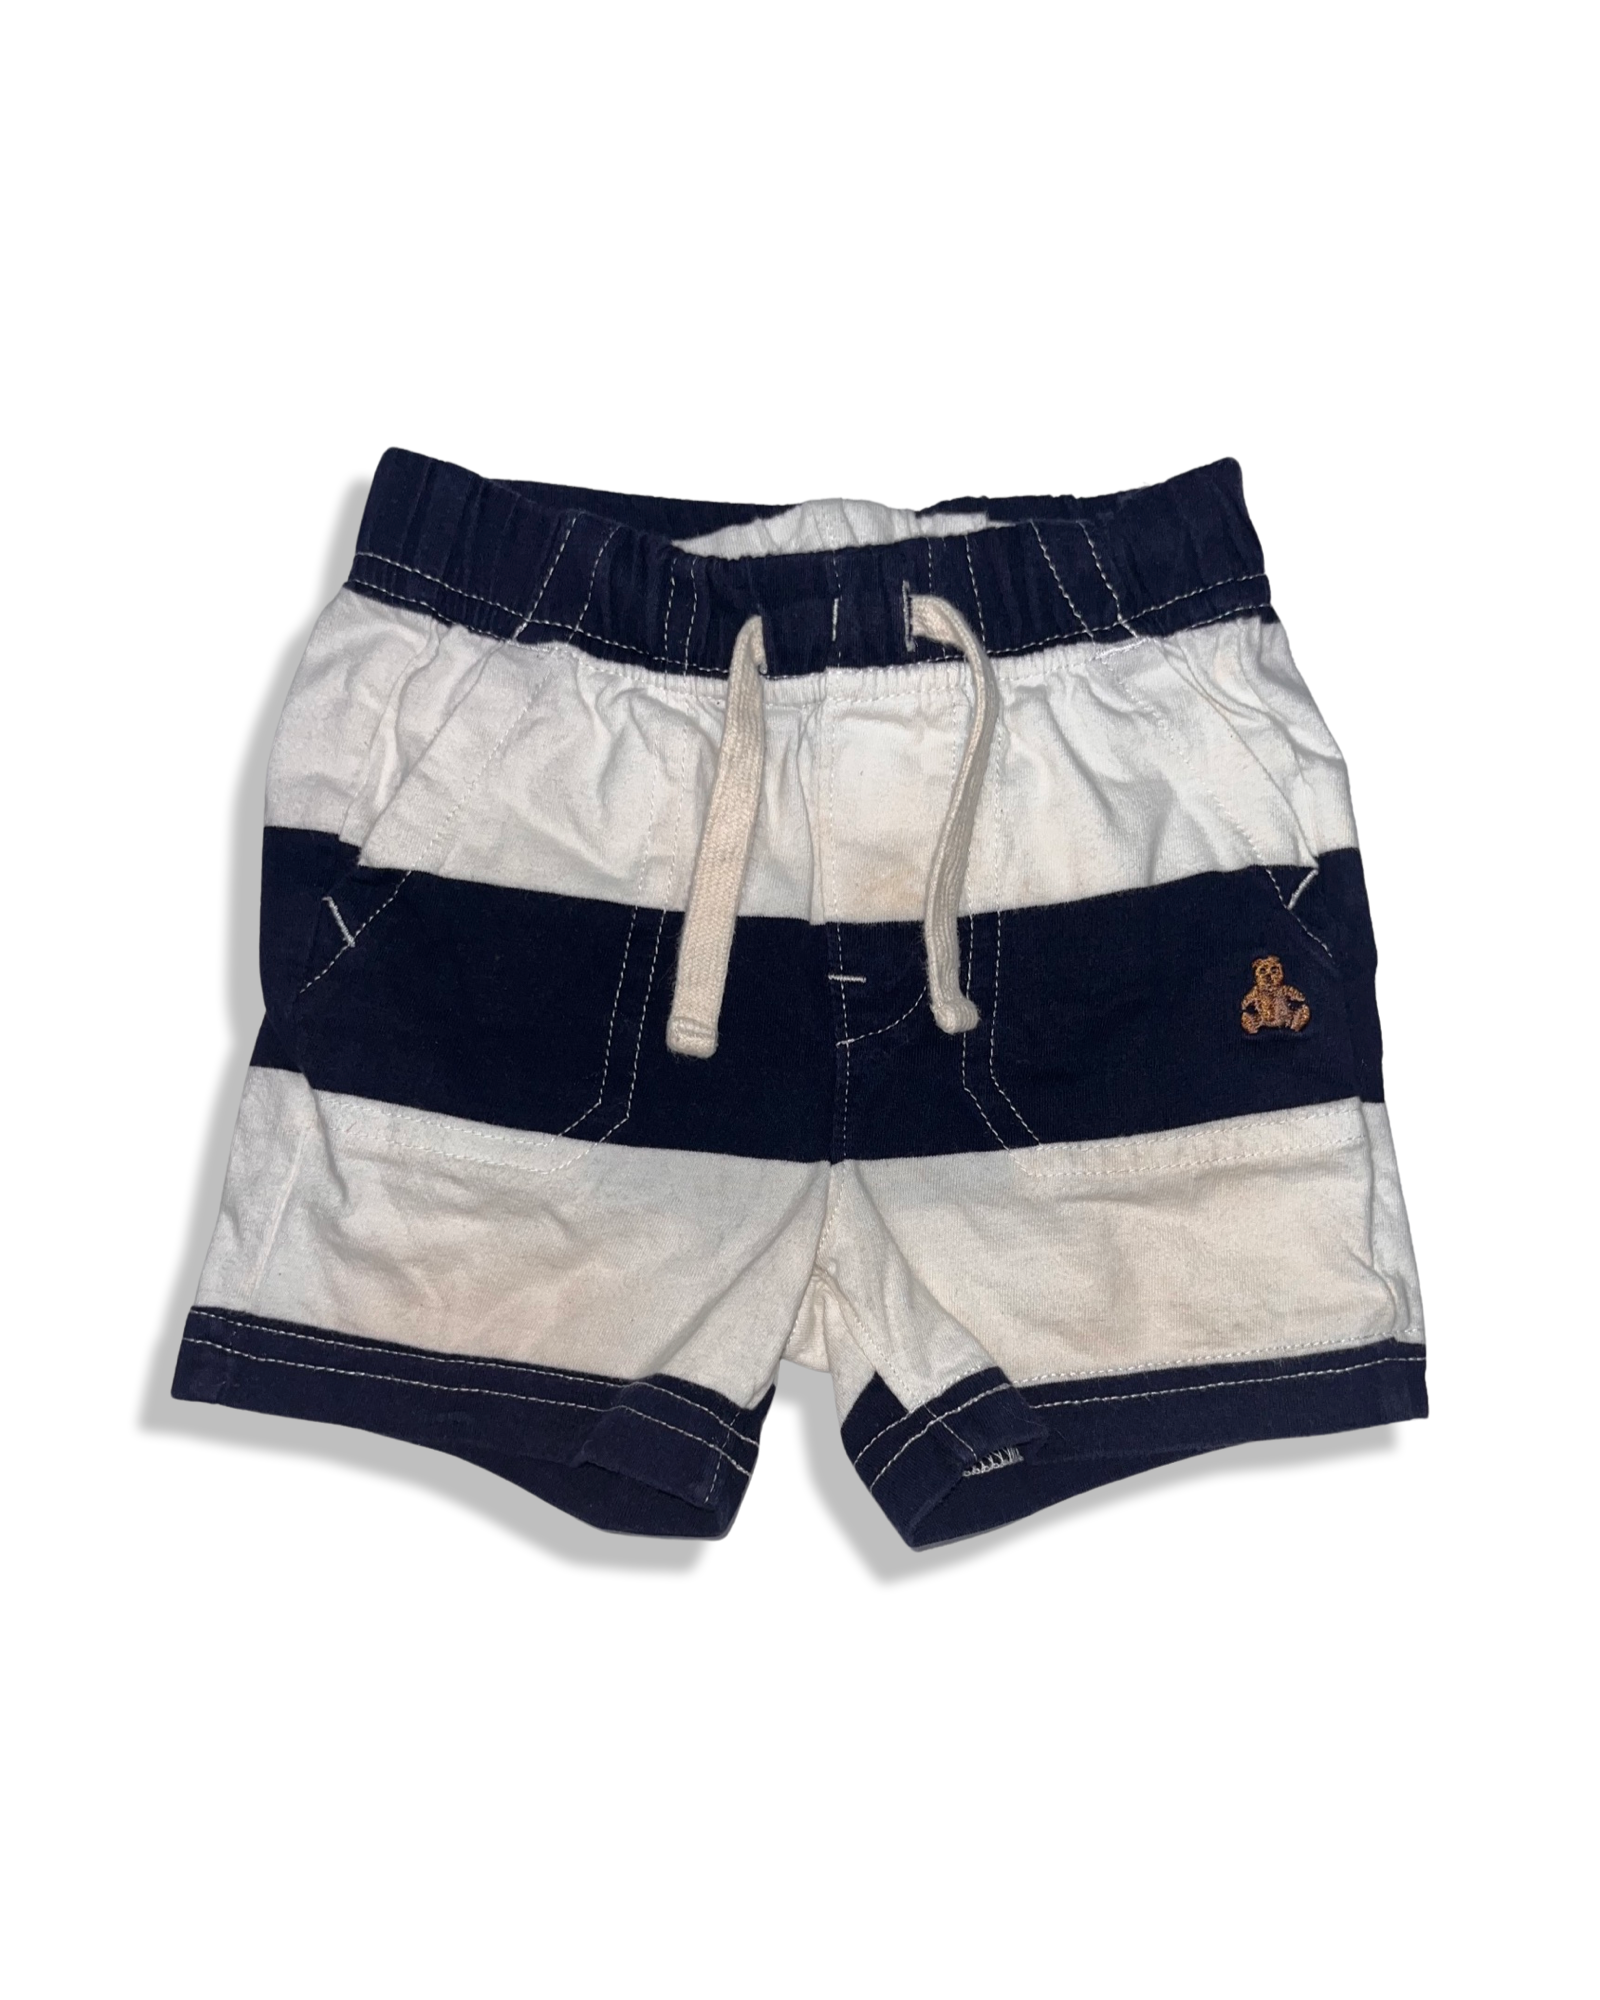 Baby Gap Blue and White Large Stripe Shorts (6-12M)